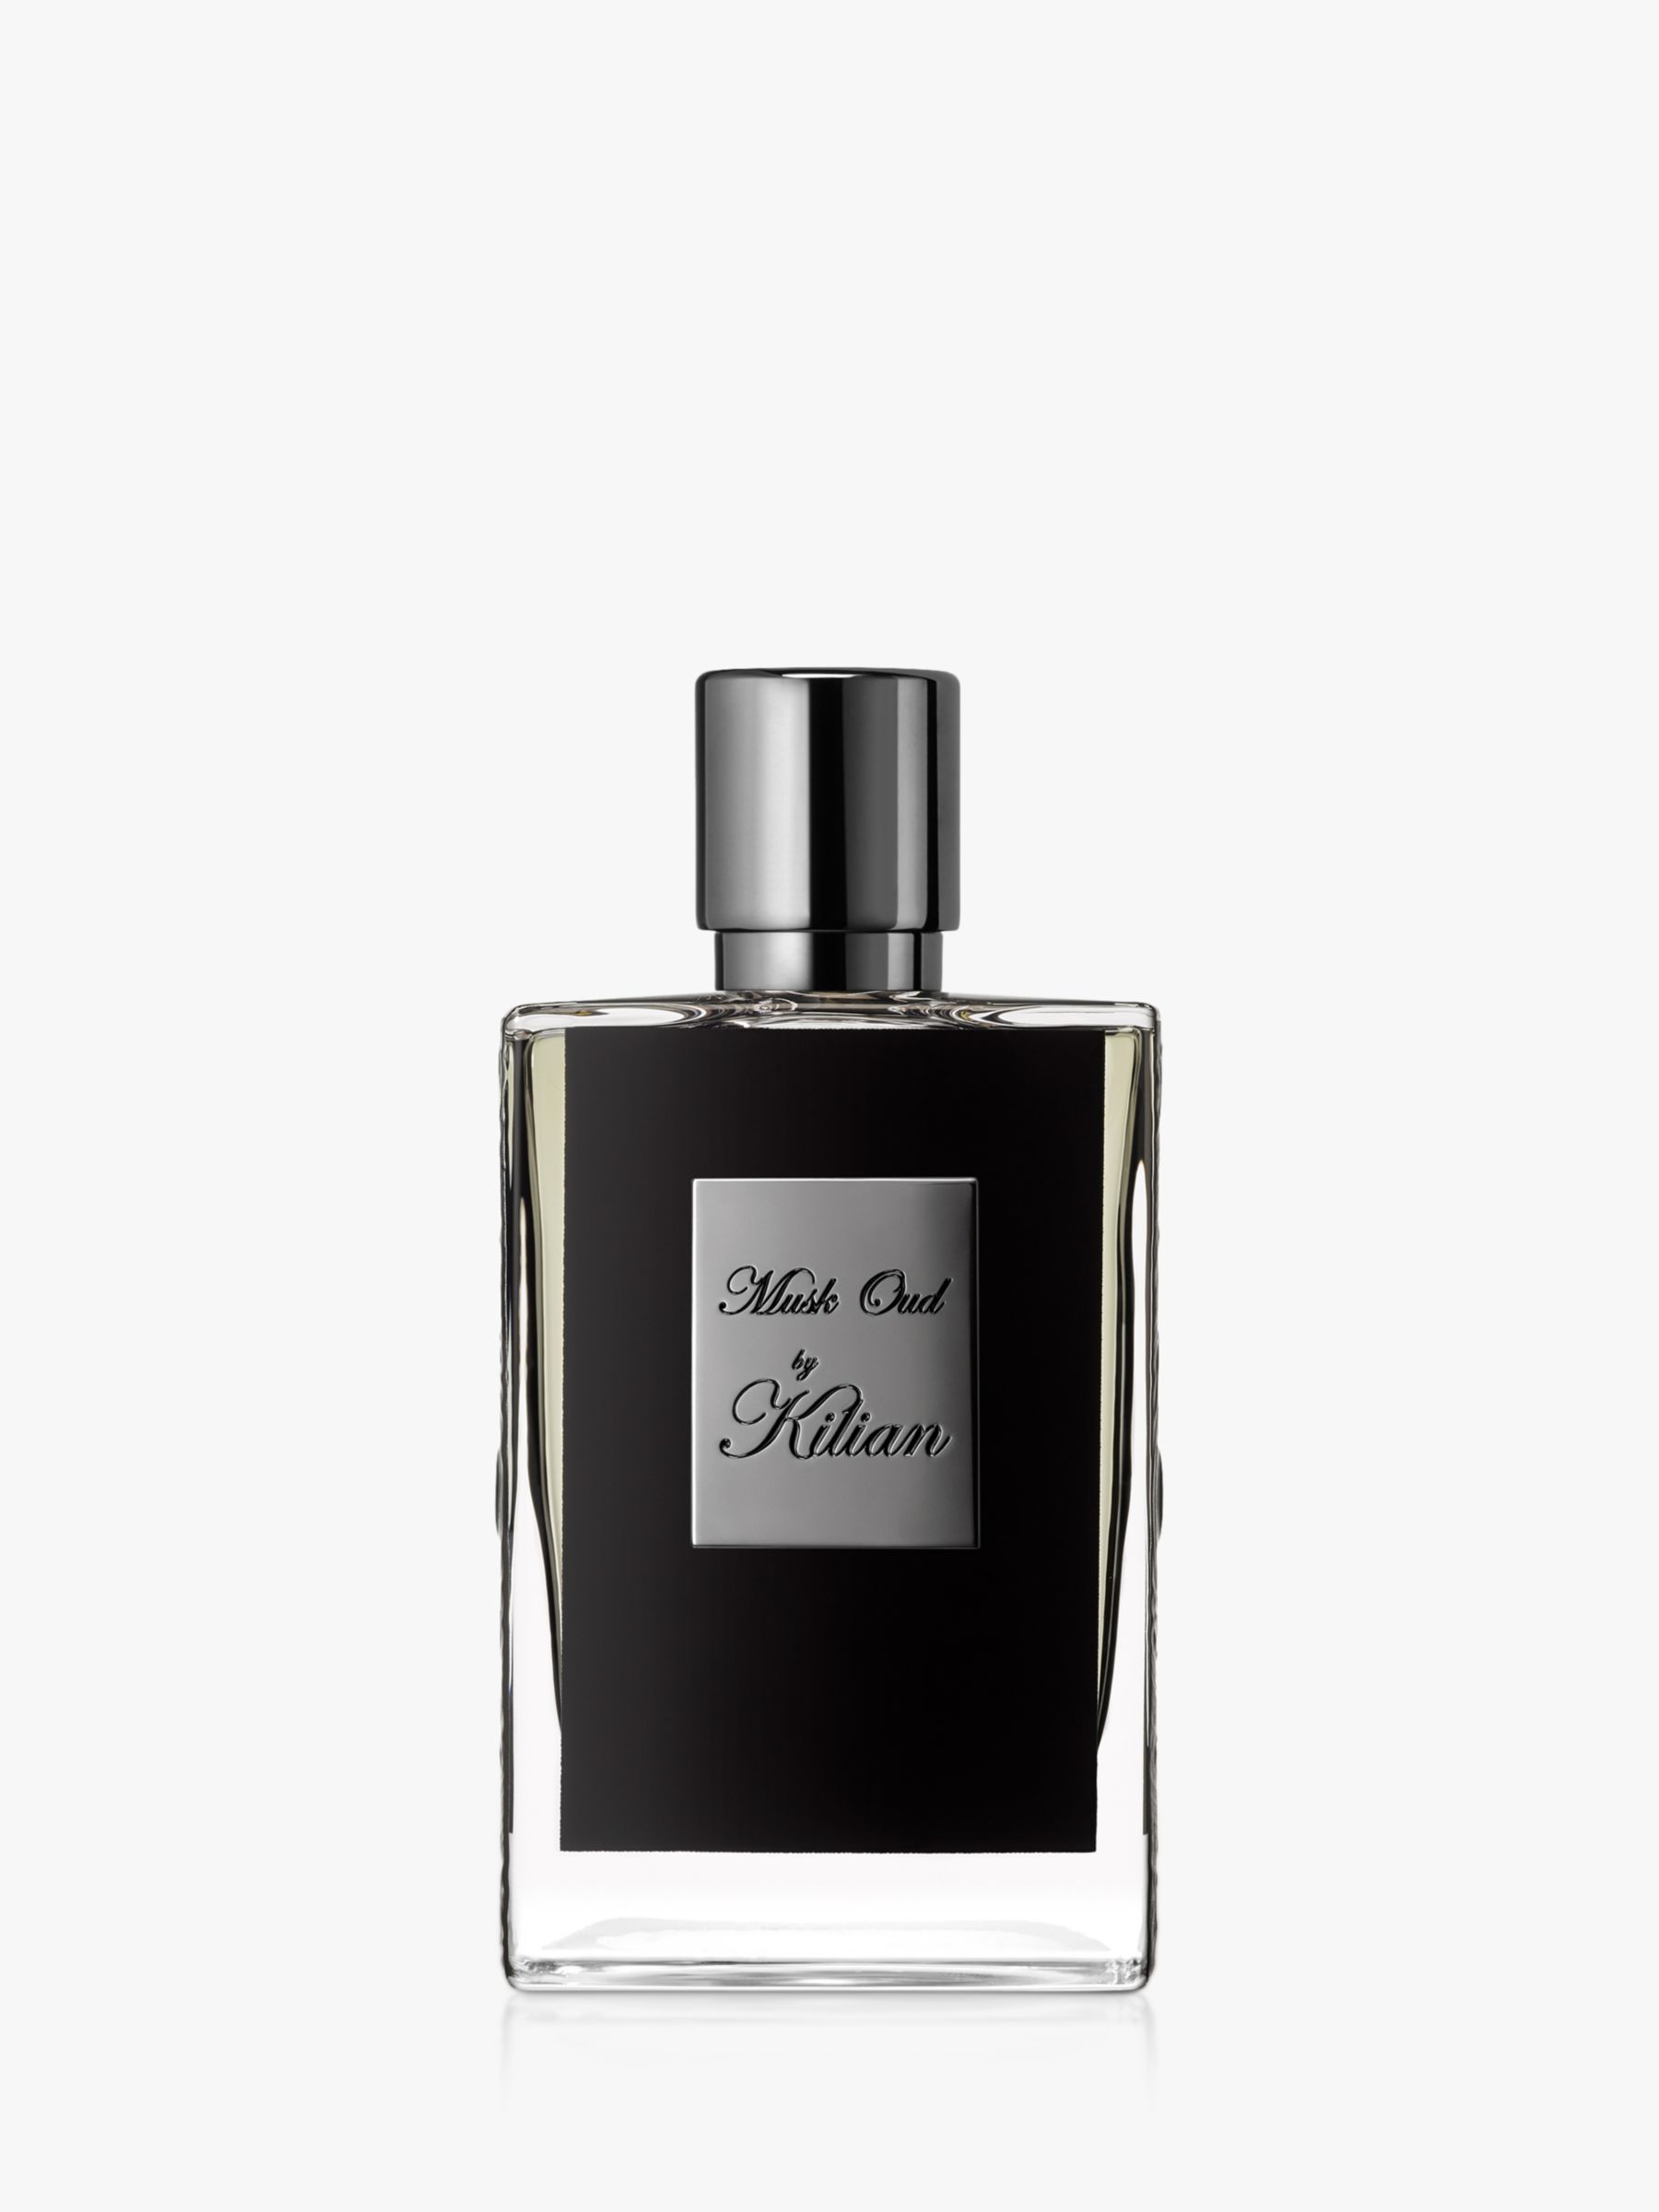 KILIAN PARIS Musk Oud Eau de Parfum Refill, 50ml